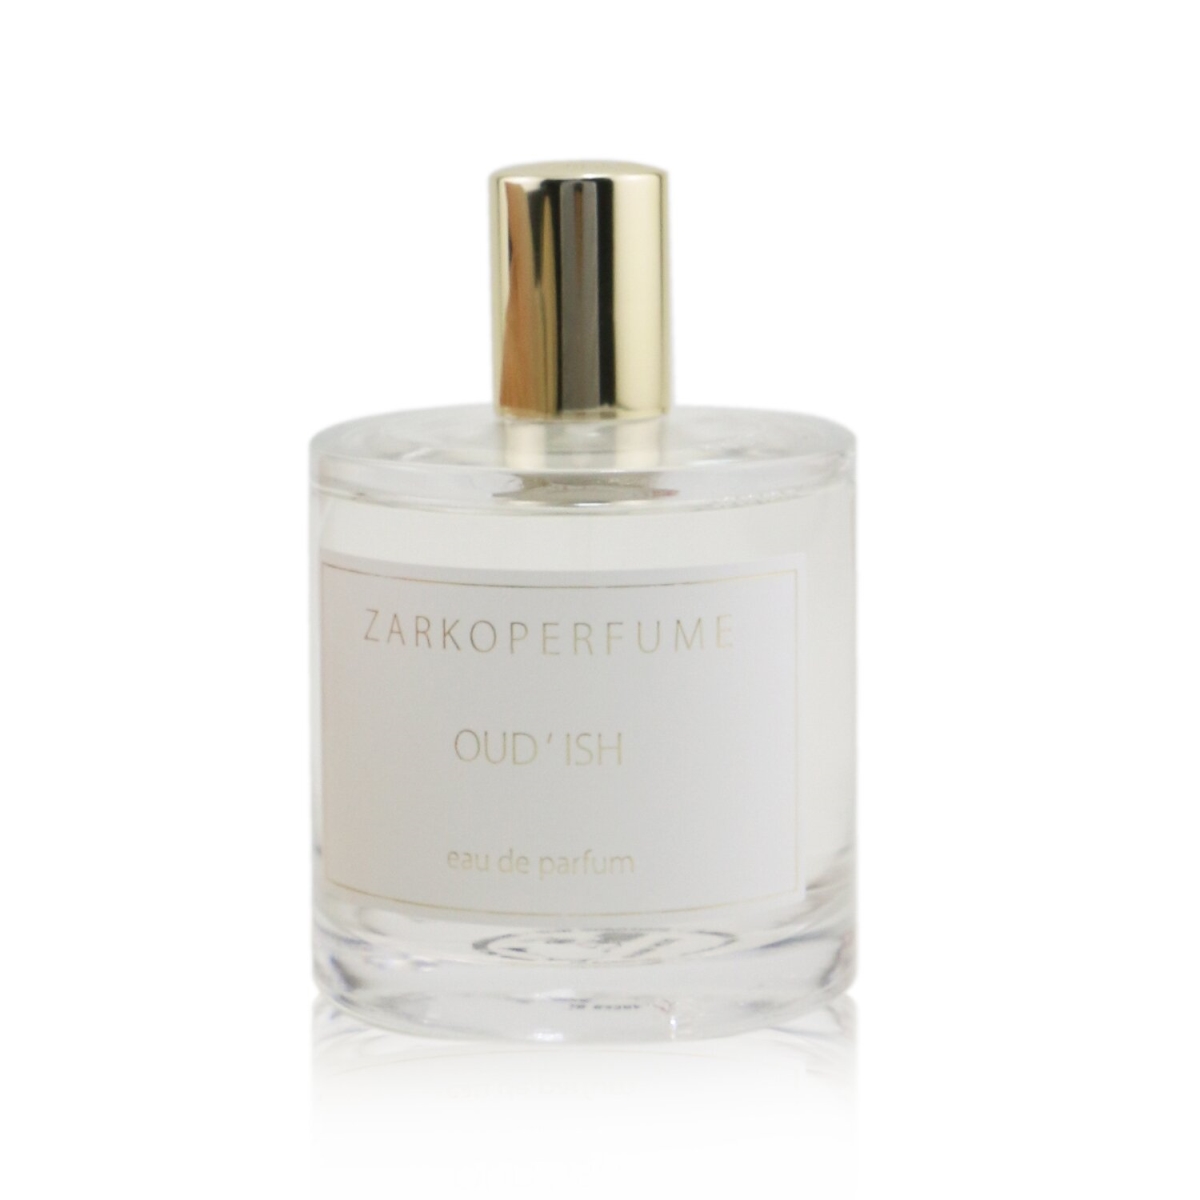 Picture of Zarkoperfume 262195 3.4 oz OudIsh Eau De Parfum Spray for Women